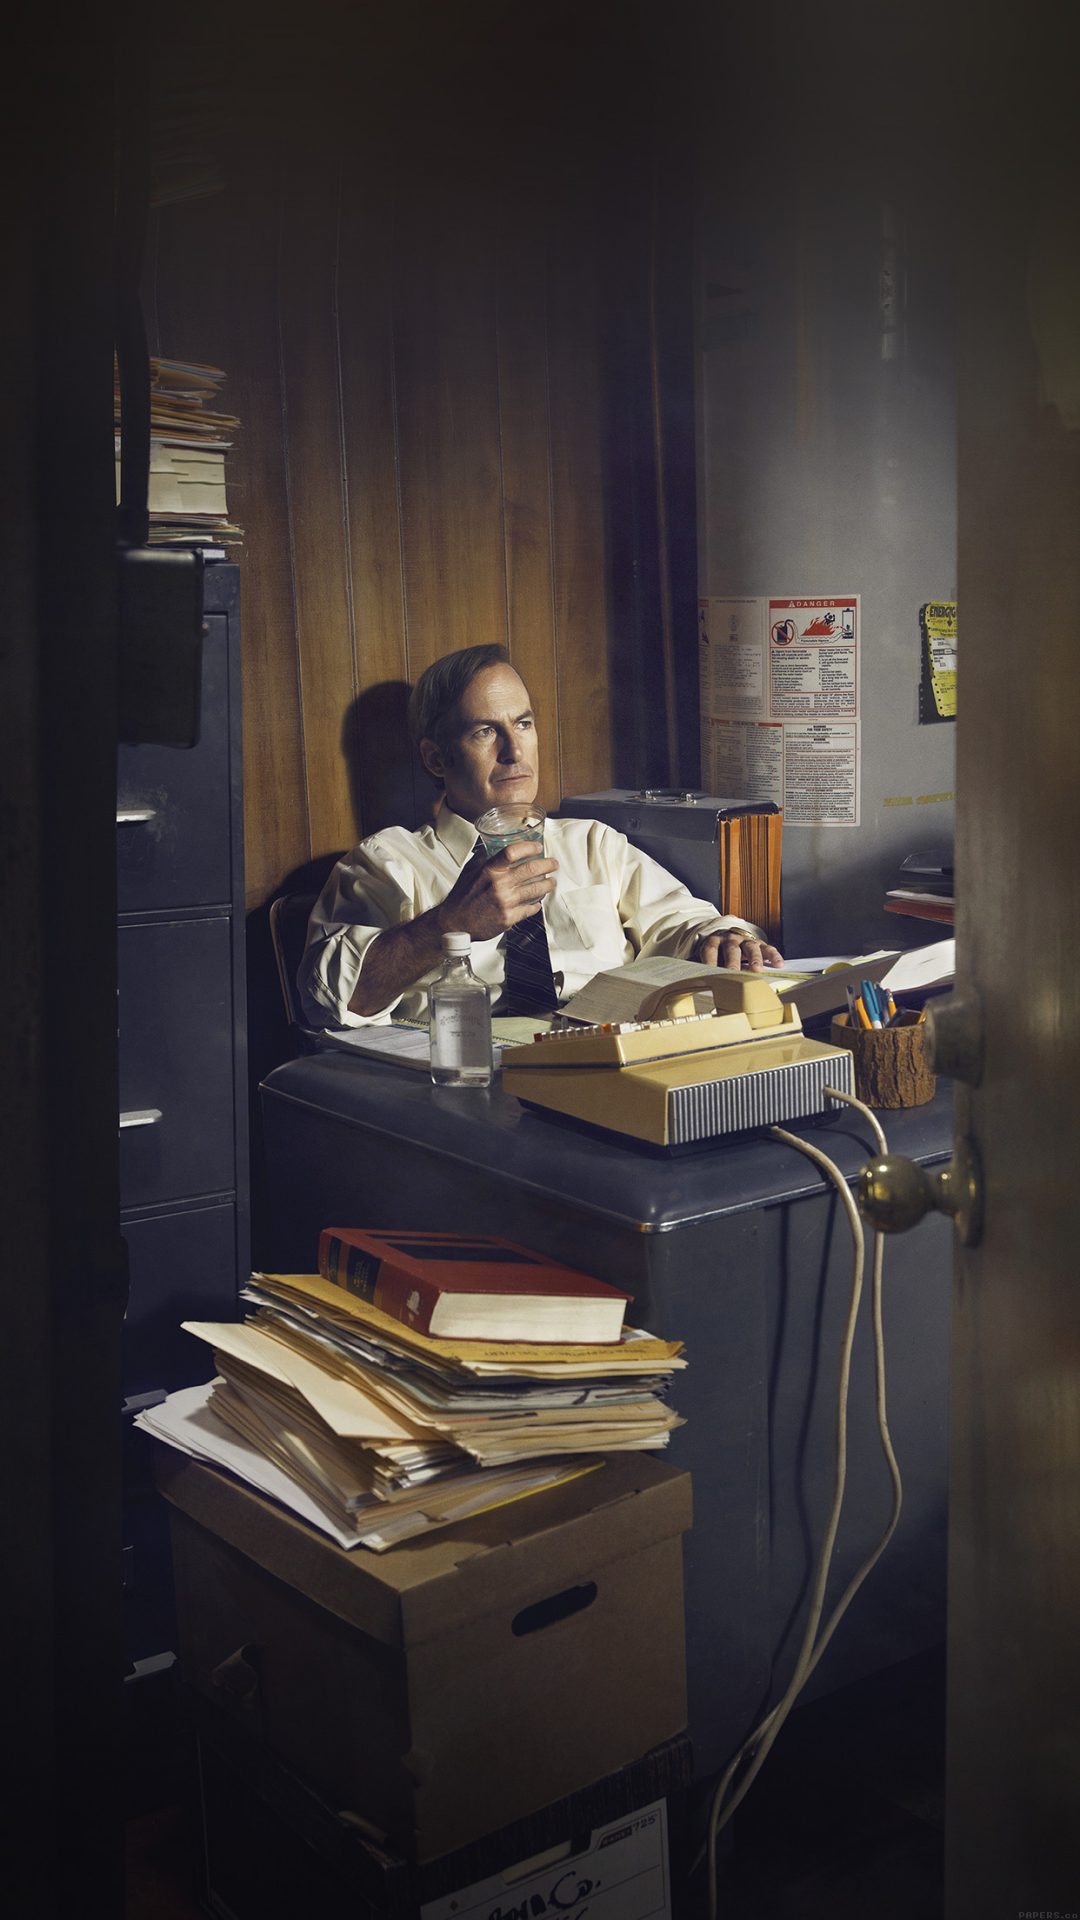 Bob Odenkirk as Saul Goodman - Better Call Saul _ Season 1, Gallery - Photo Credit: Ben Leuner/AMC